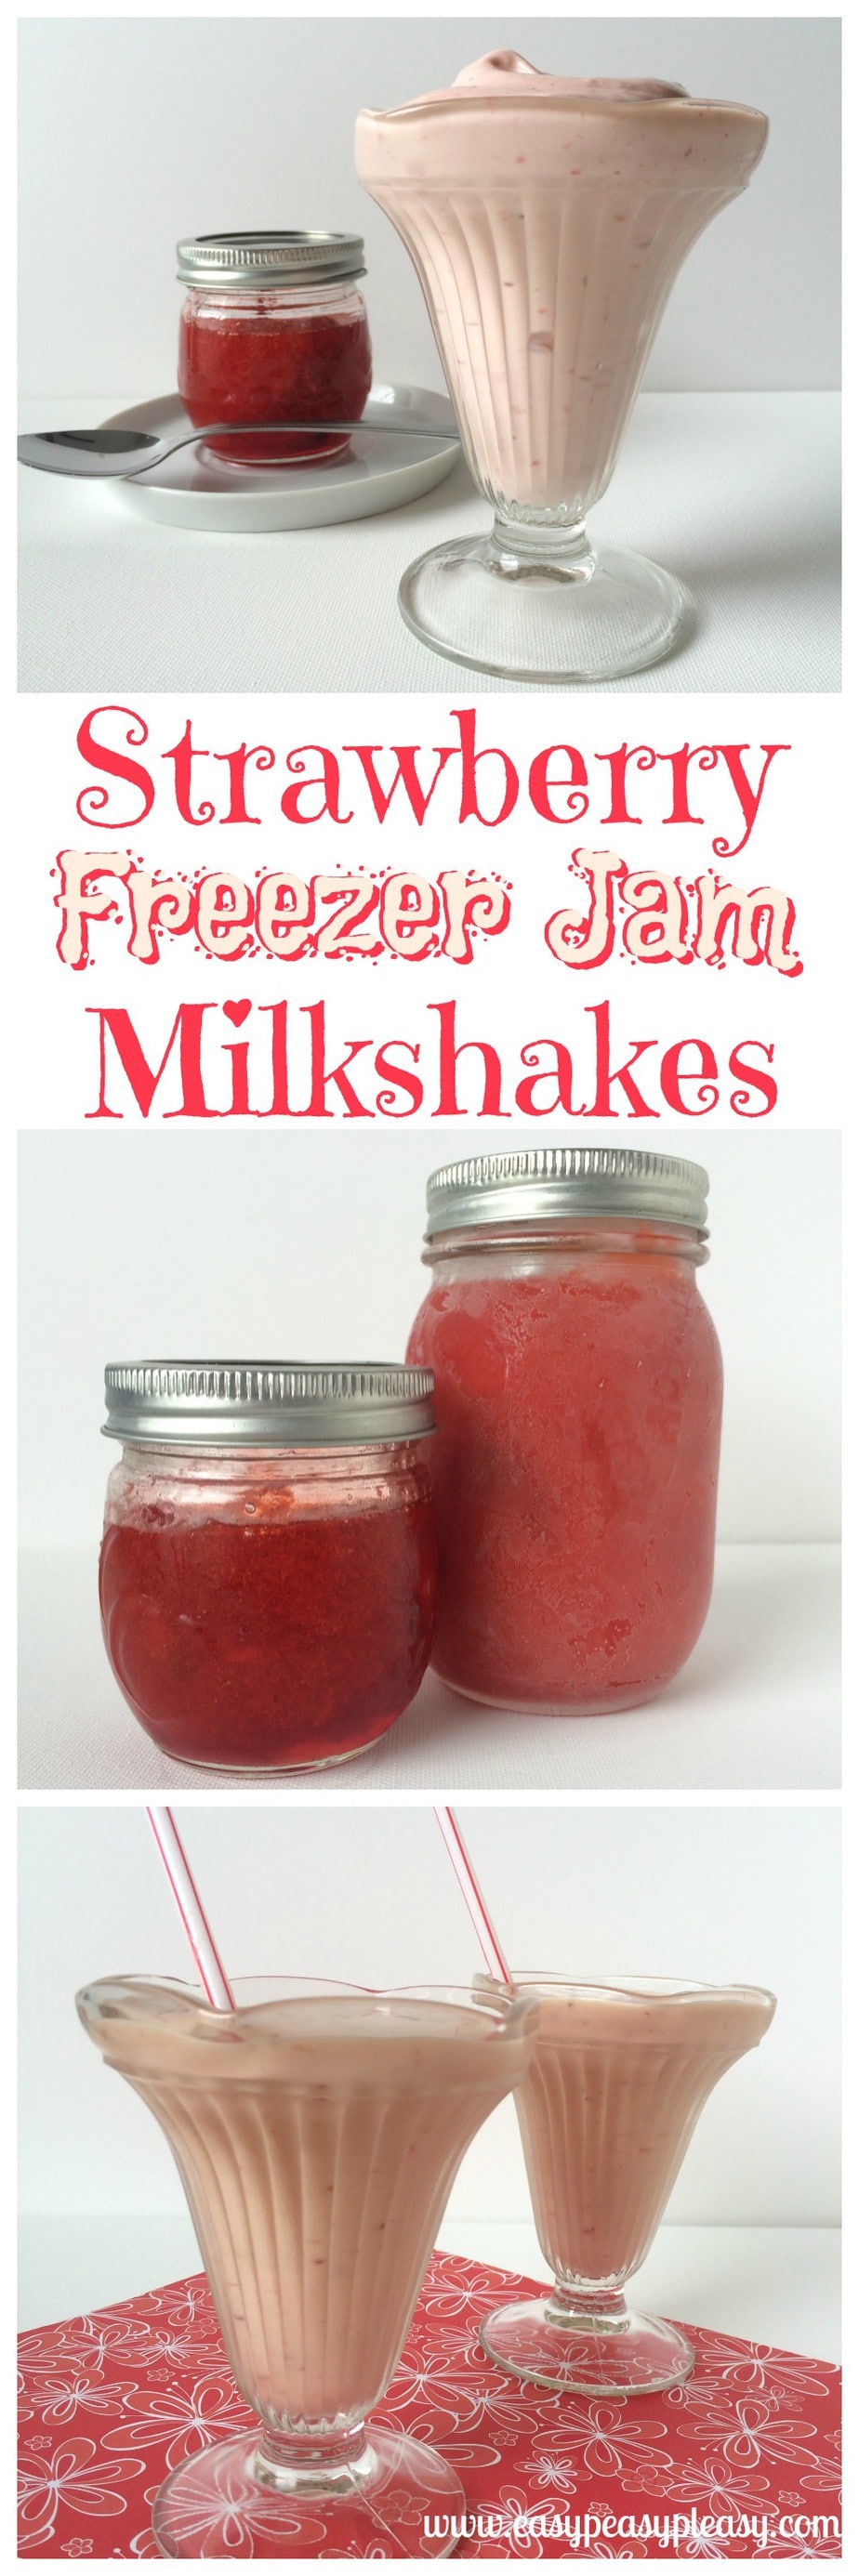 Strawberry Freezer Jam Milkshakes